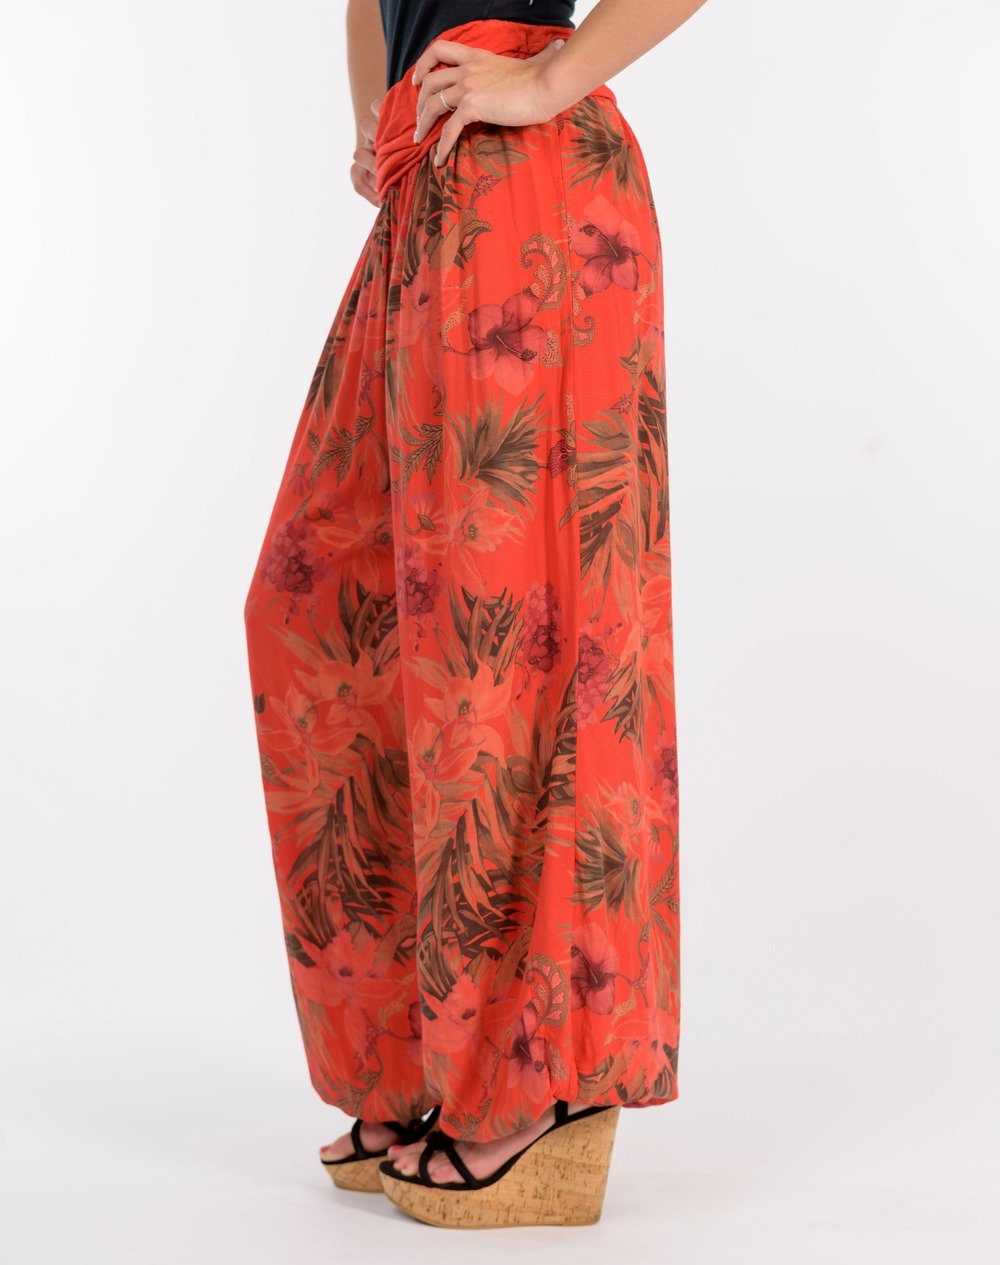 mit floralem Haremshose Aladinhose more fashion Muster malito 8939 Einheitsgröße rot than